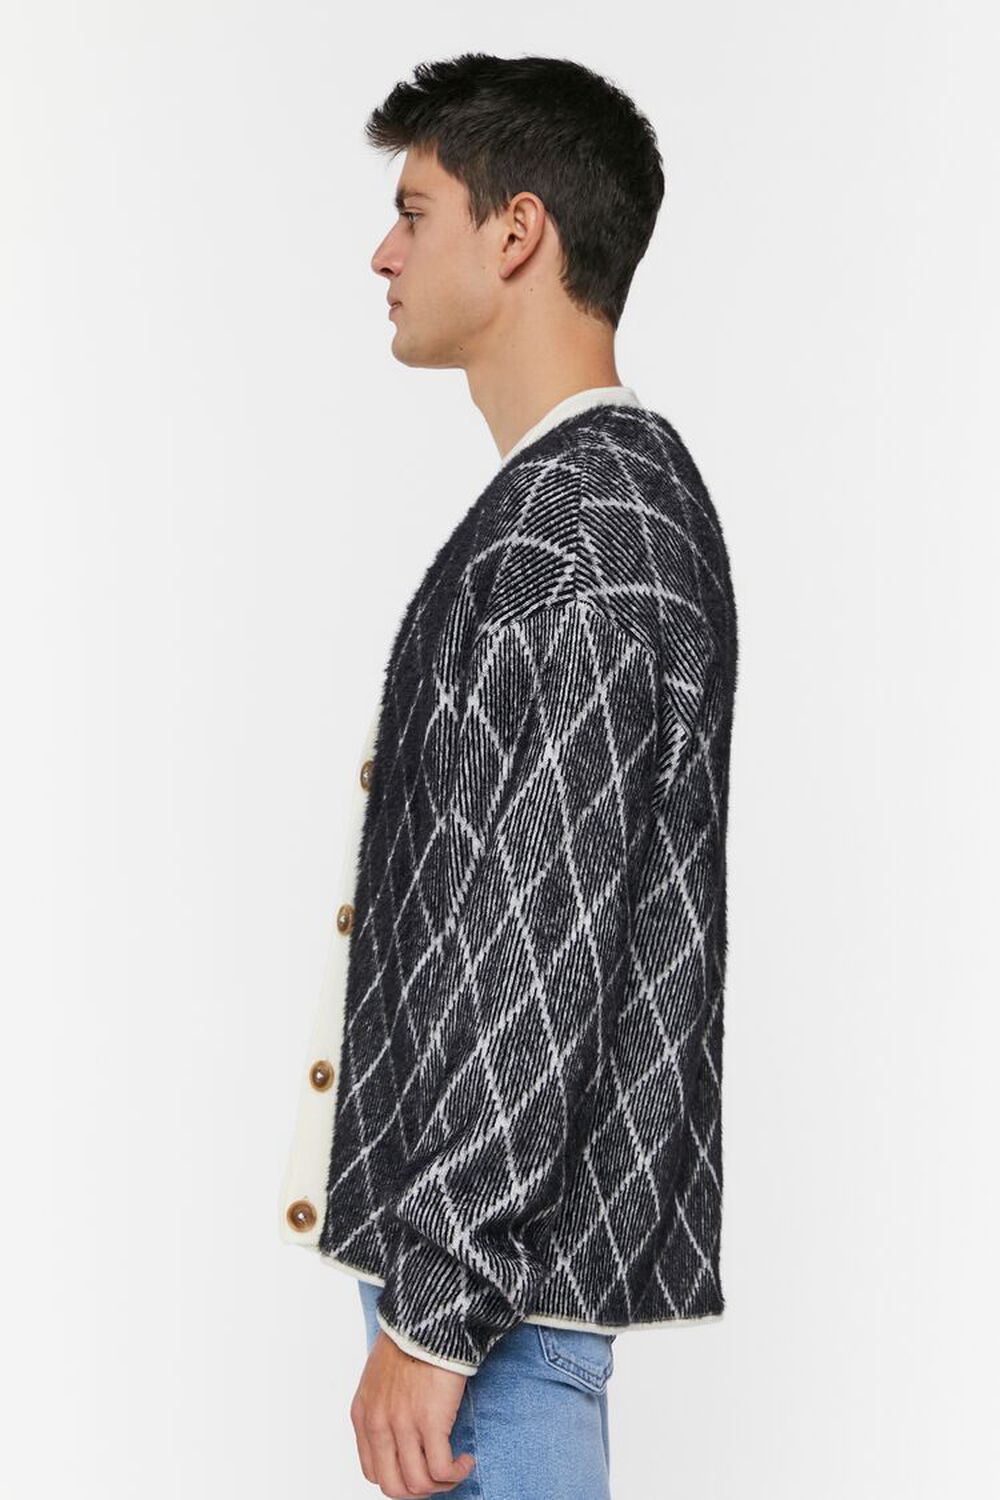 WHITE/BLACK Lattice Grid Cardigan Sweater, image 3